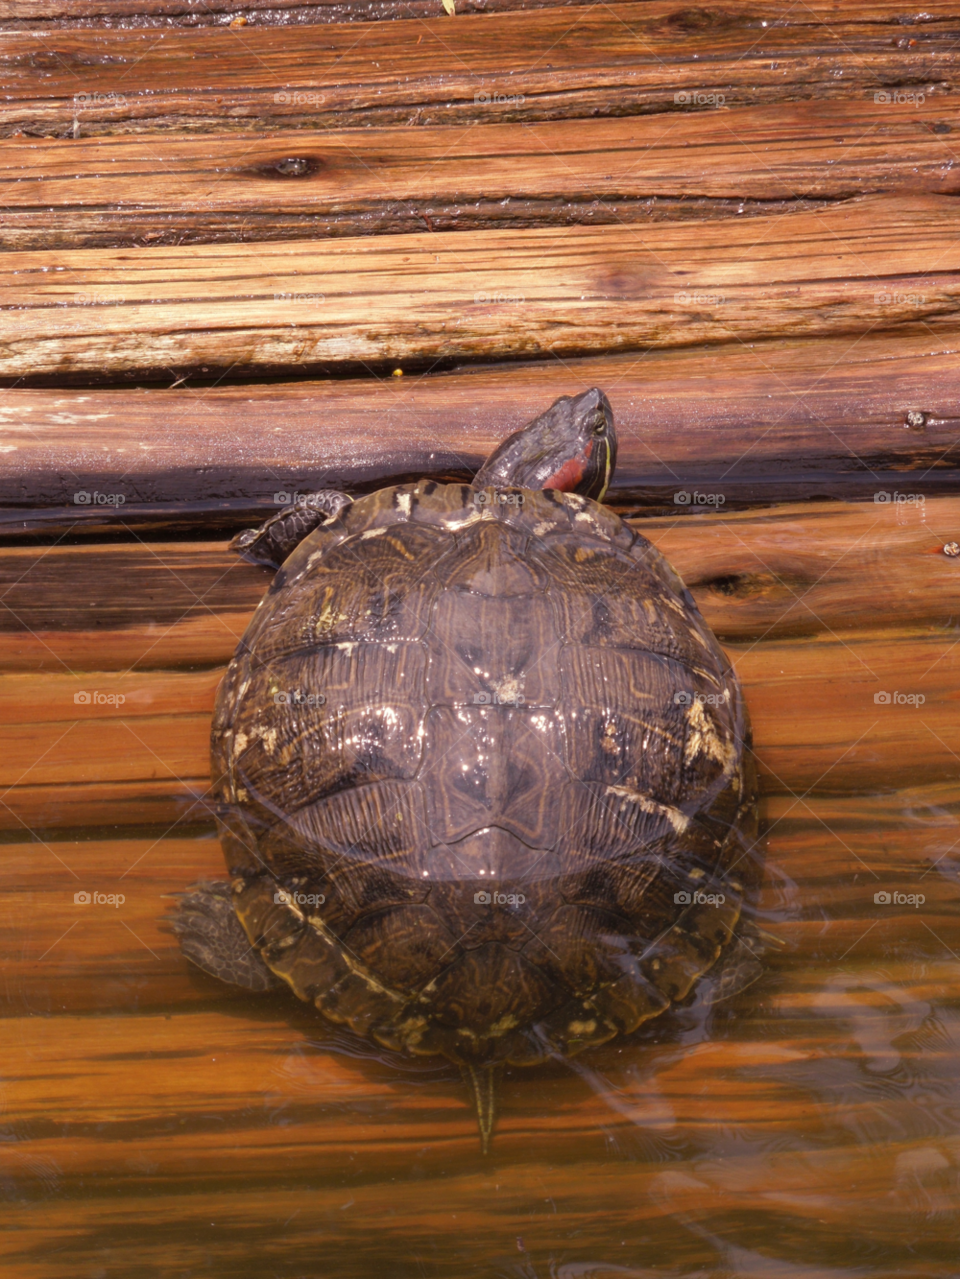 water turtle rio by doras